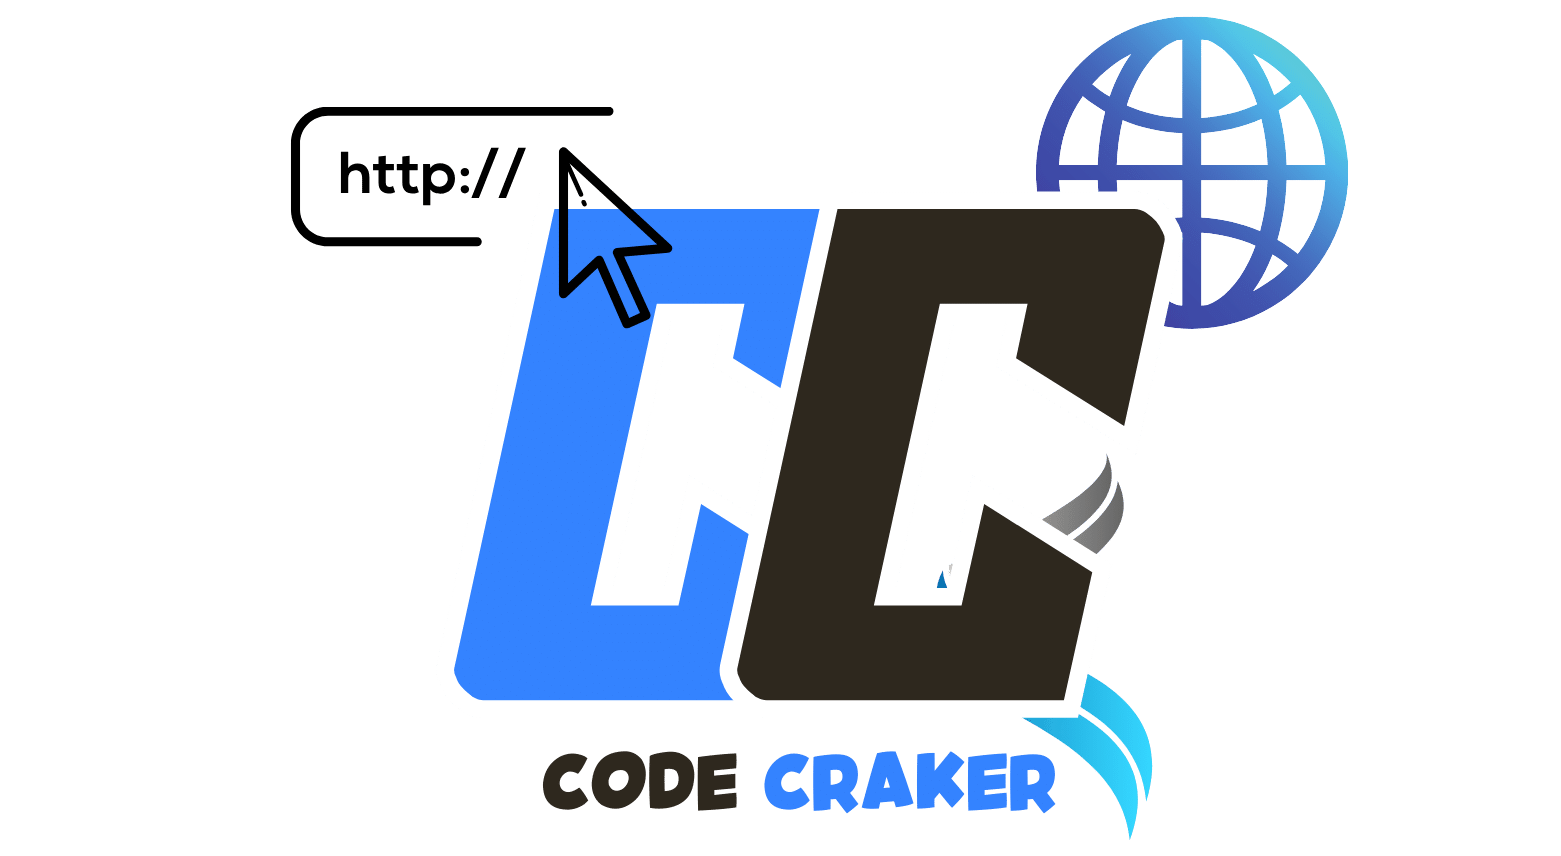 Code Craker